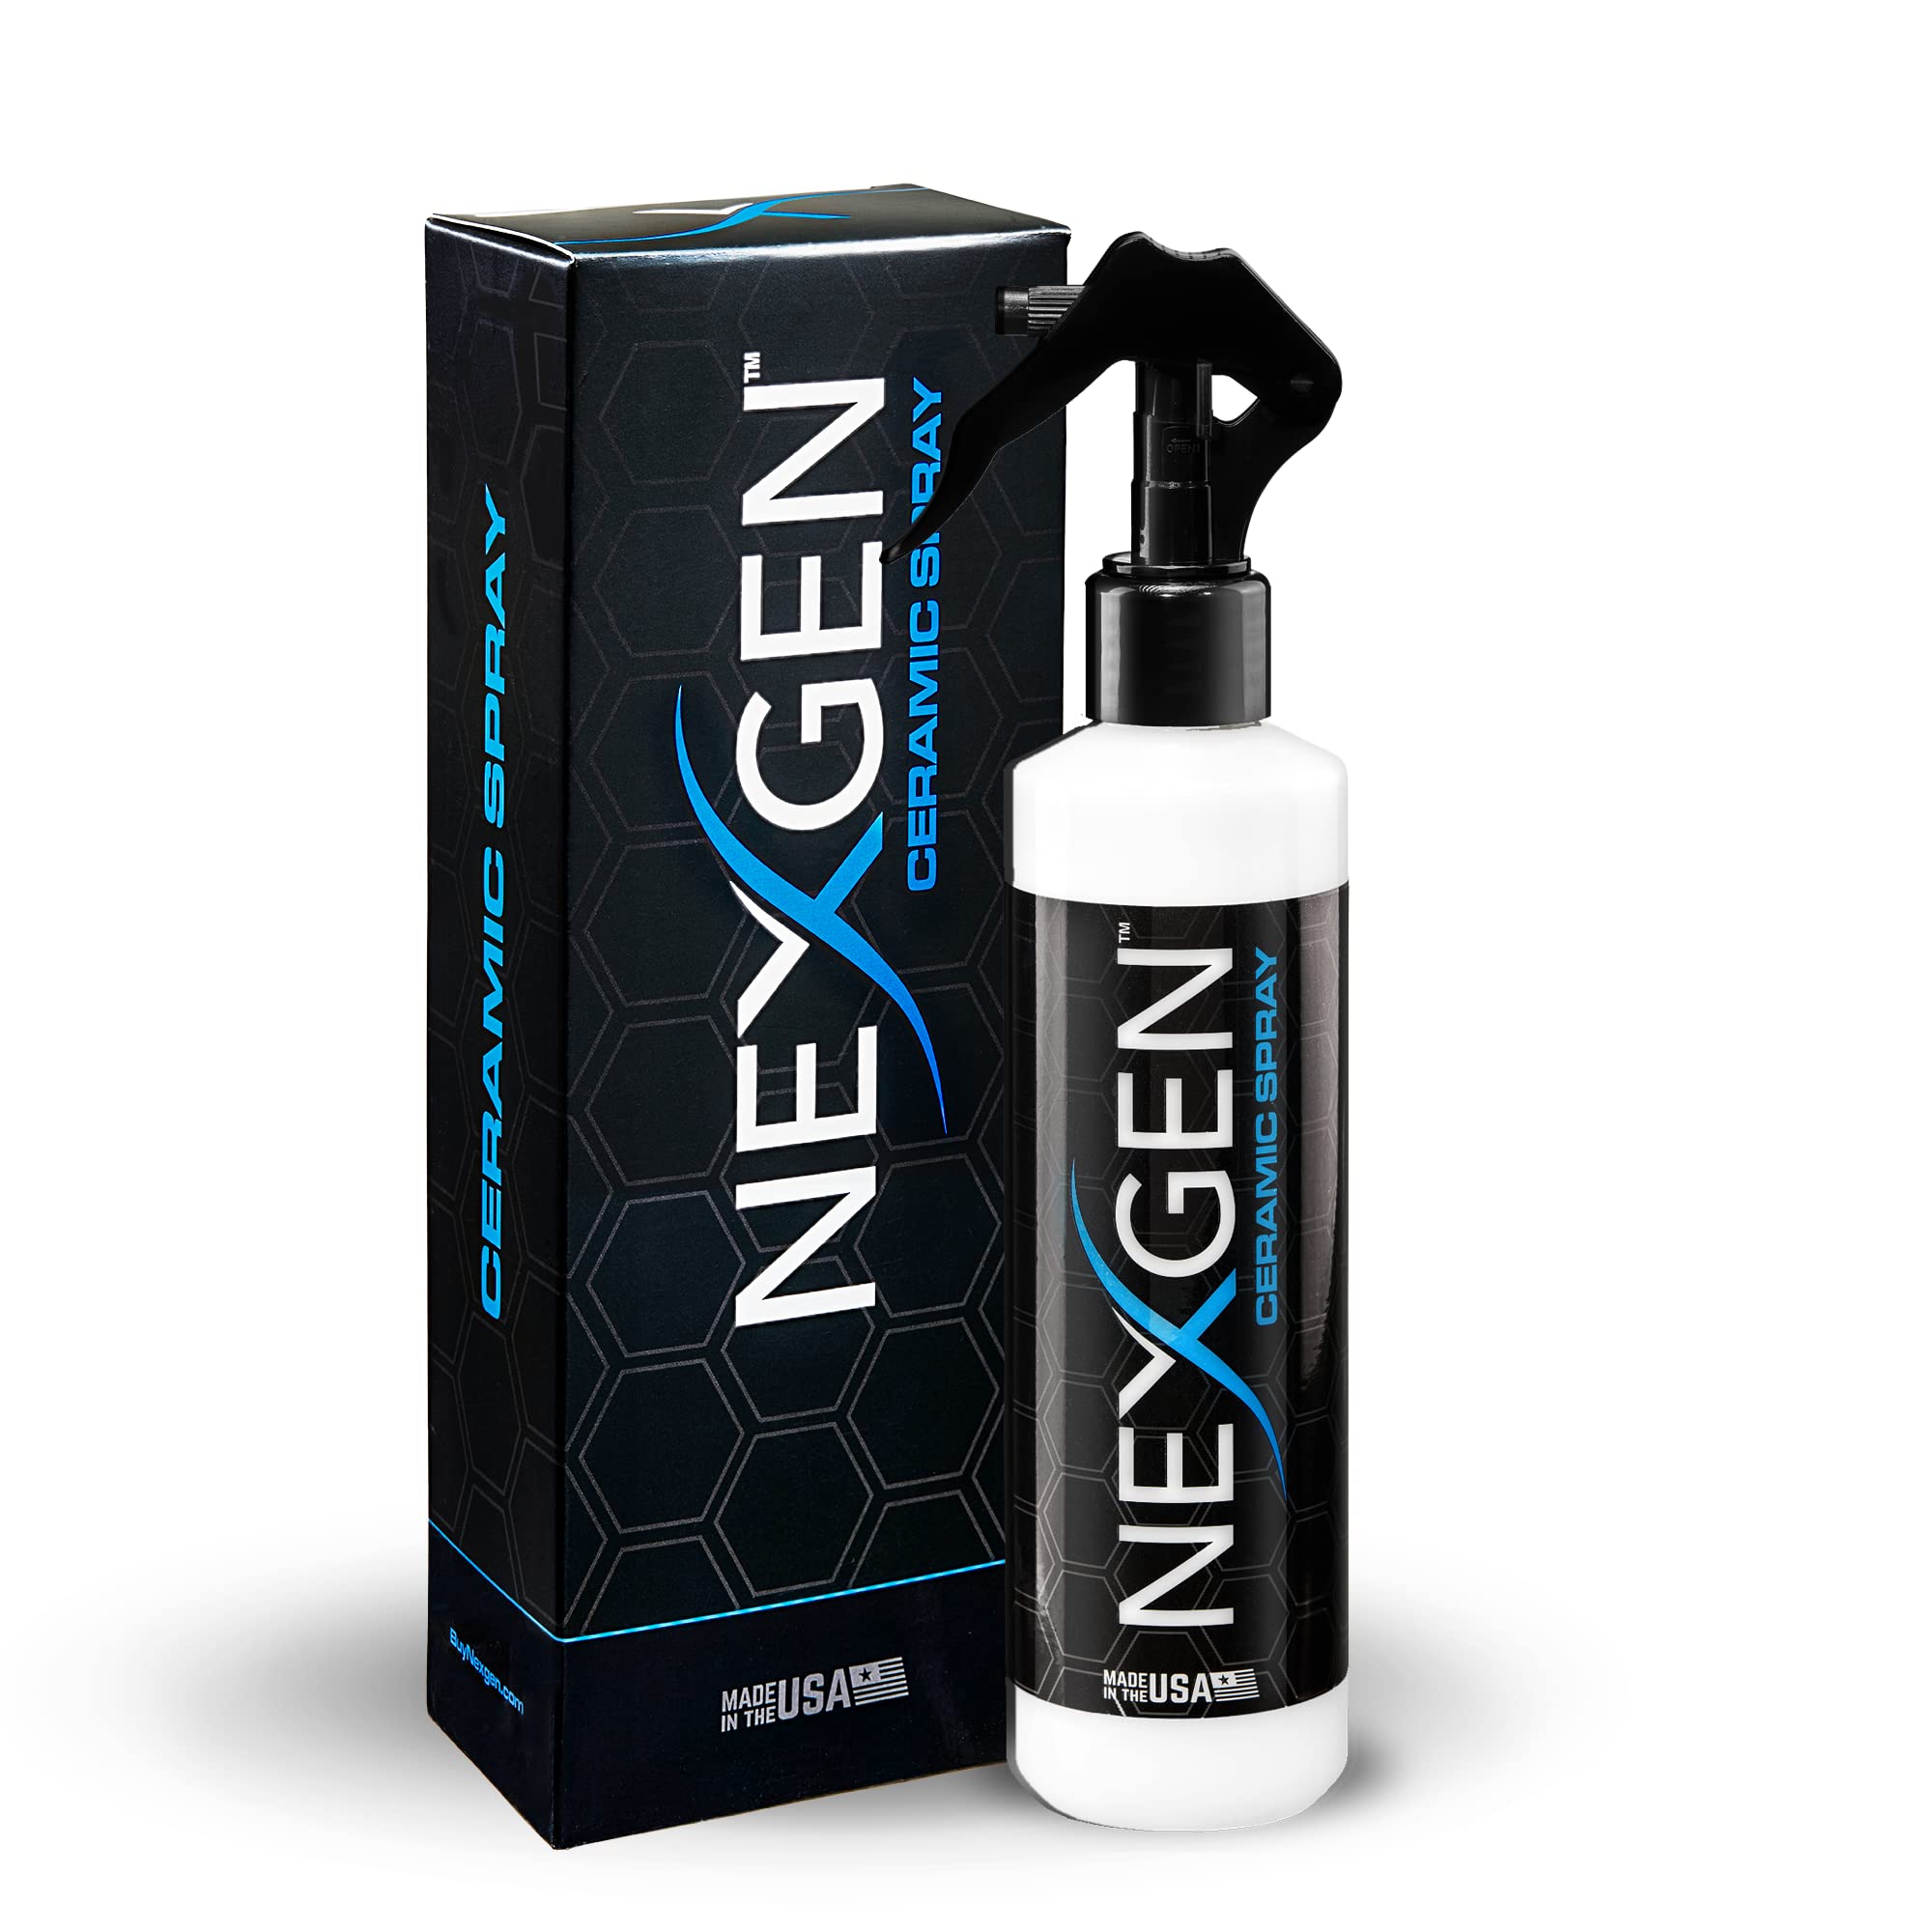 Nexgen Ceramic Spray Silicon Dioxide — Ceramic Coating Spray for Cars